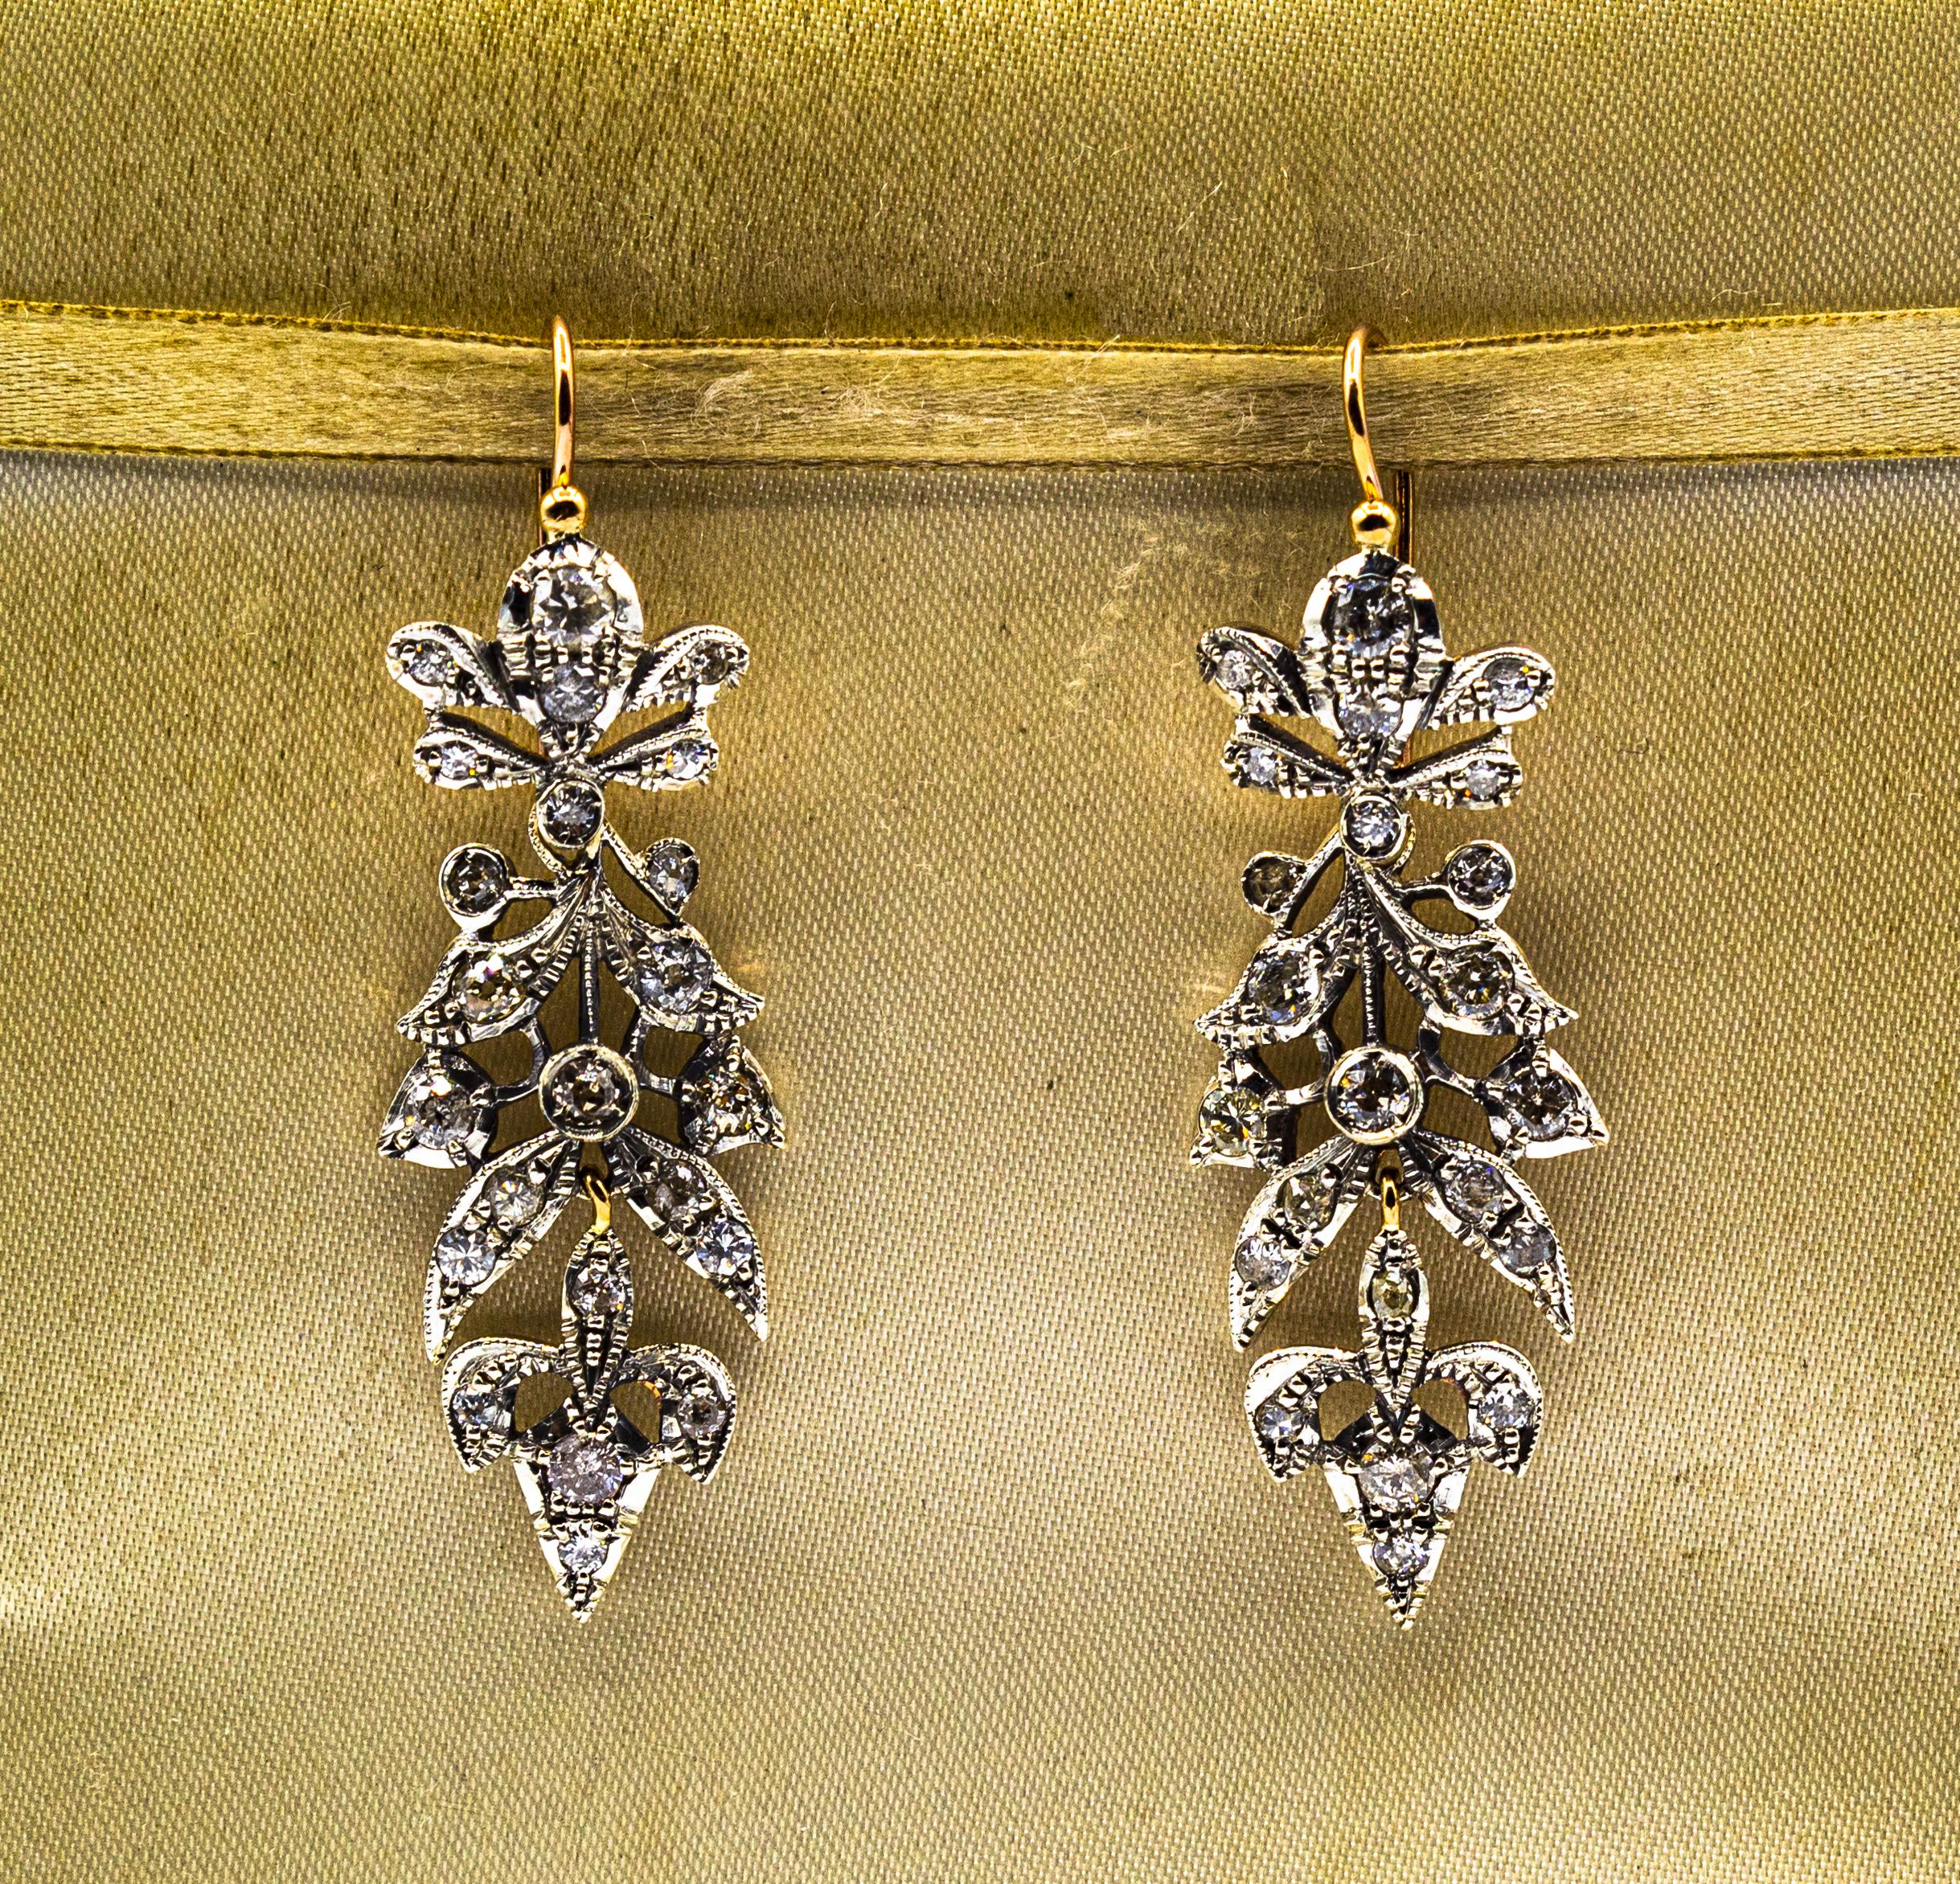 art nouveau earrings